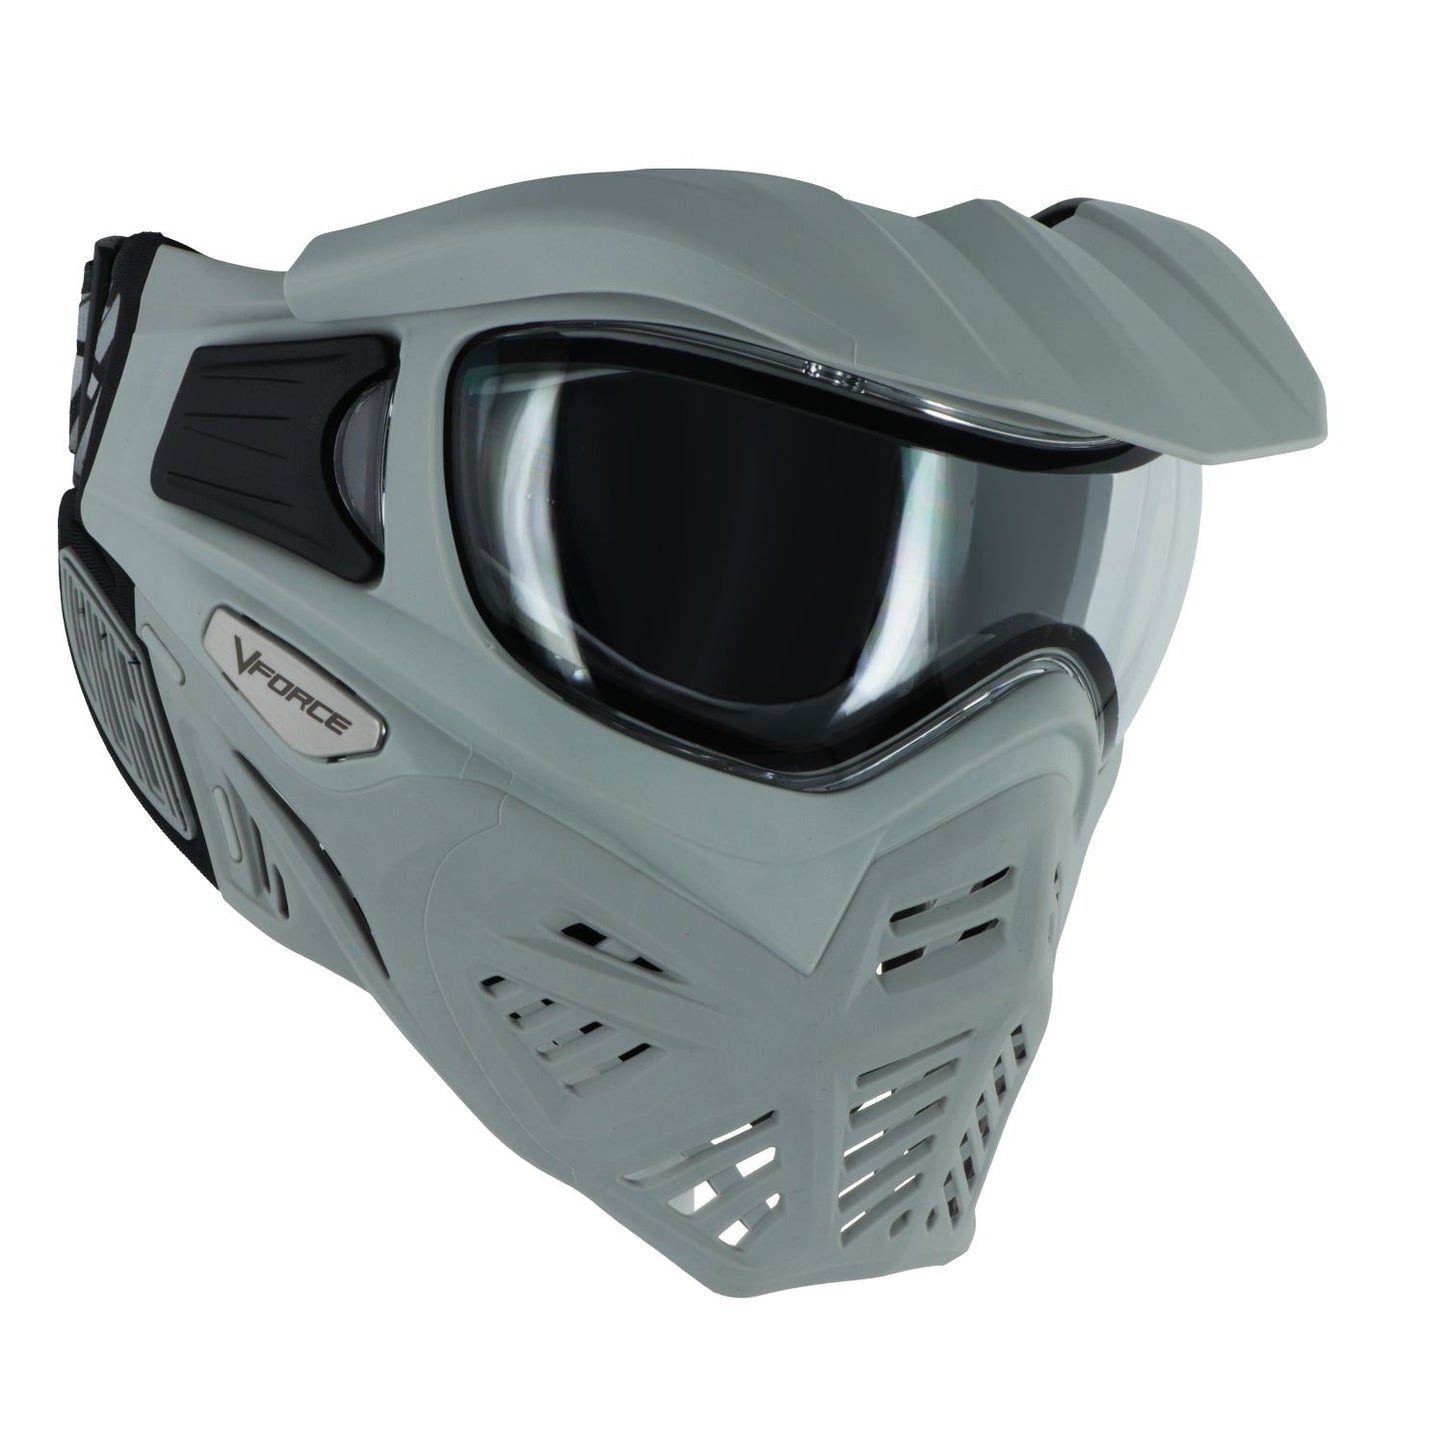 VForce Grill 2.0 Shark Paintball Mask